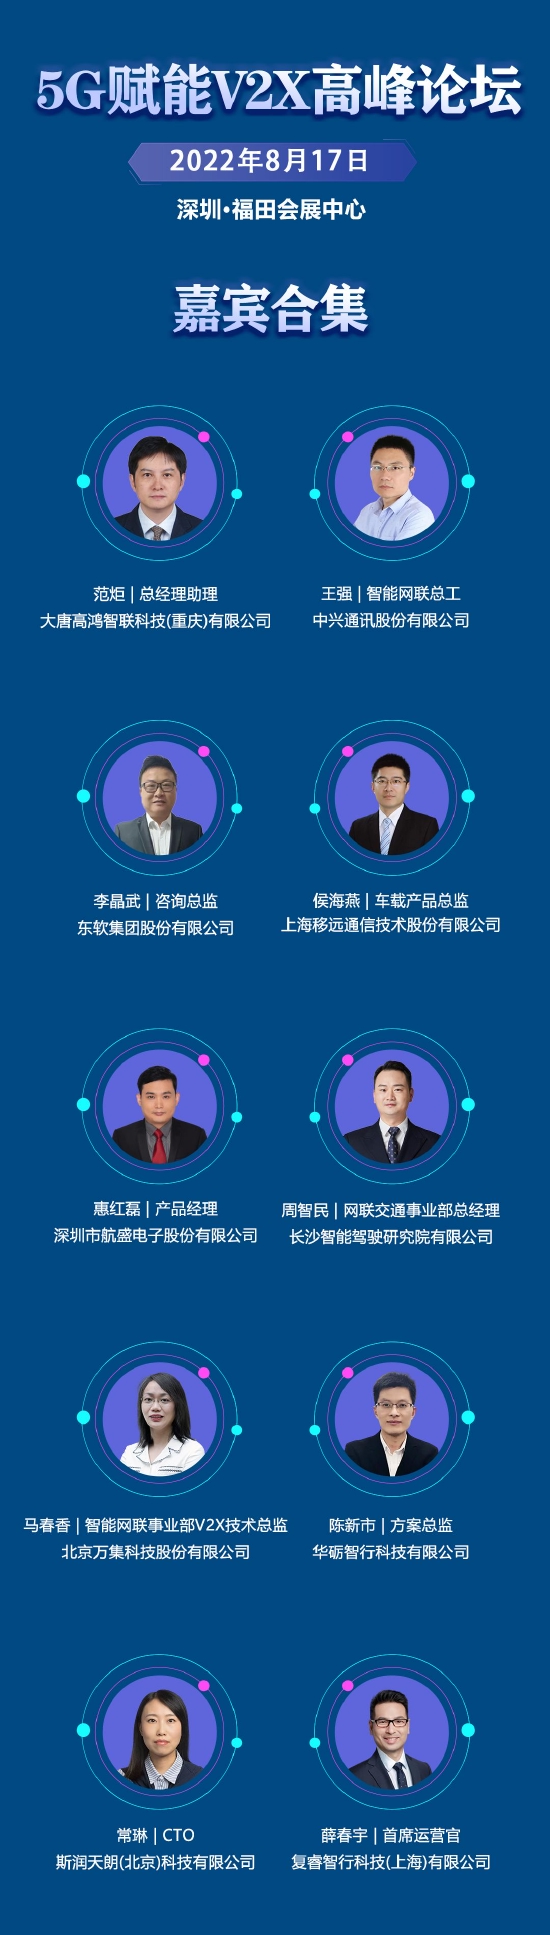 5G赋能V2X高峰论坛即将在深圳举行